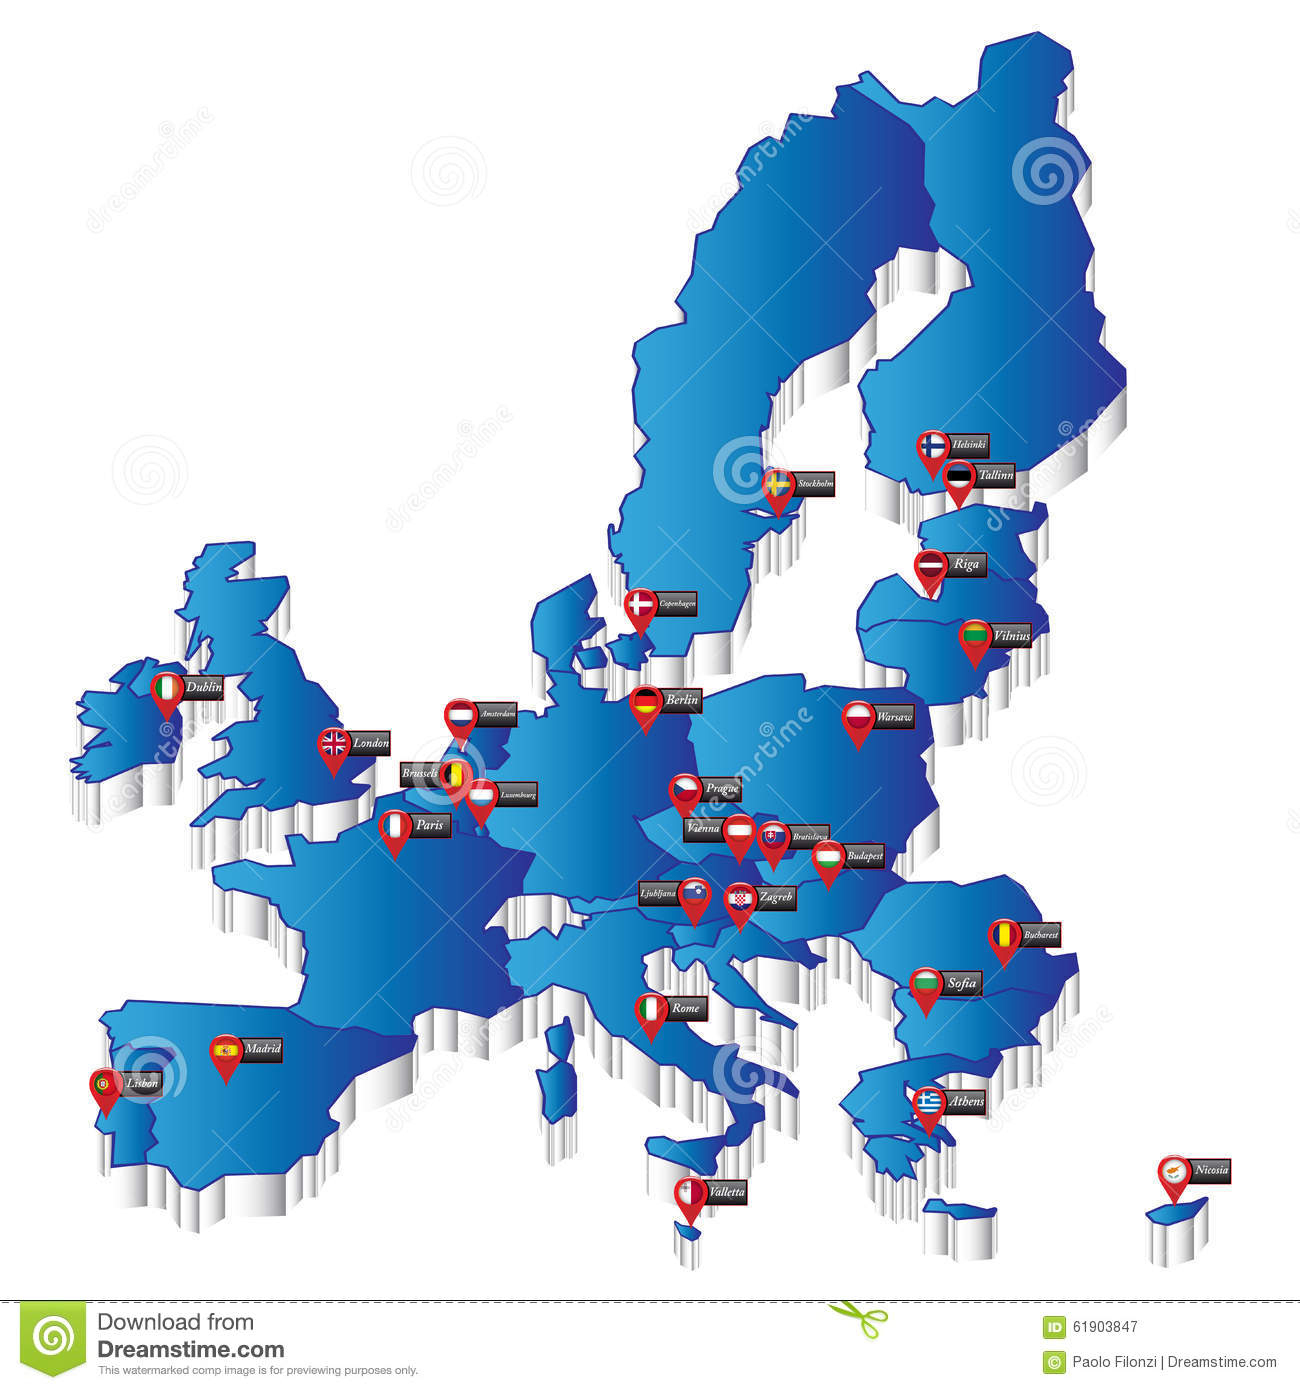 Carte De L'europe Avec Des Indicateurs De Capital Image à Carte Capitale Europe